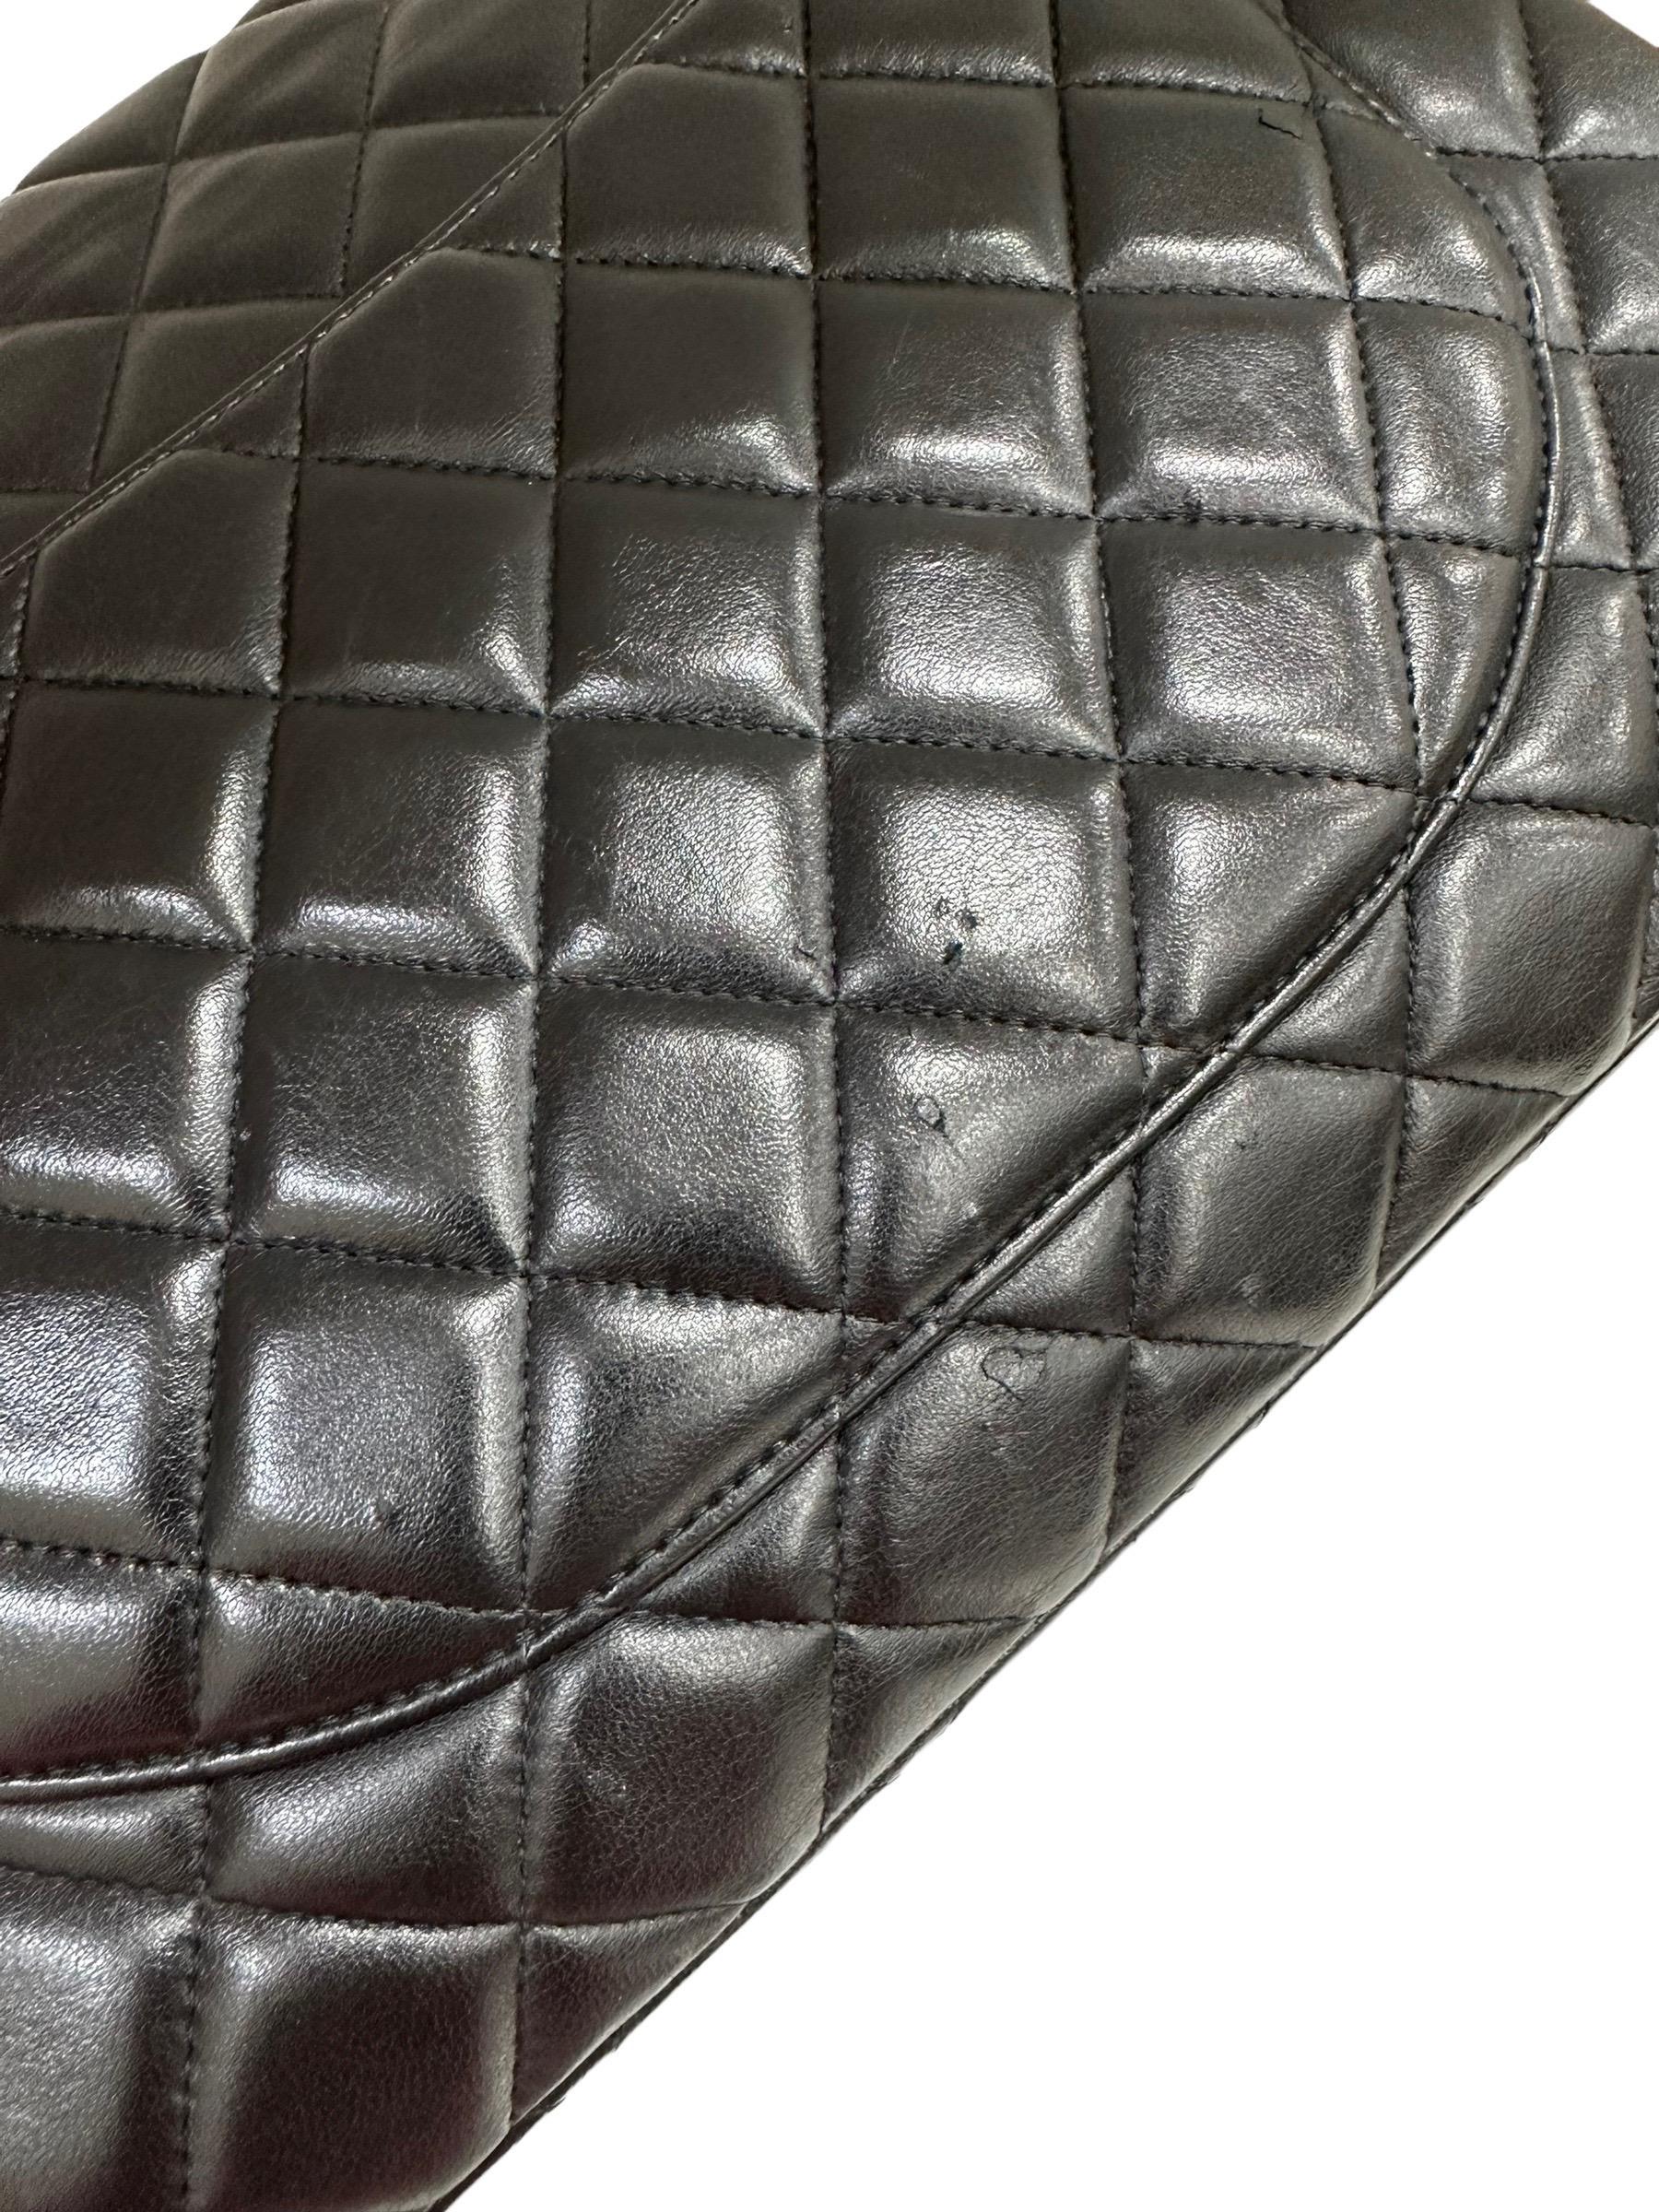 2011 Chanel Timeless Maxi Jumbo Black Leather Top Shoulder Bag For Sale 4